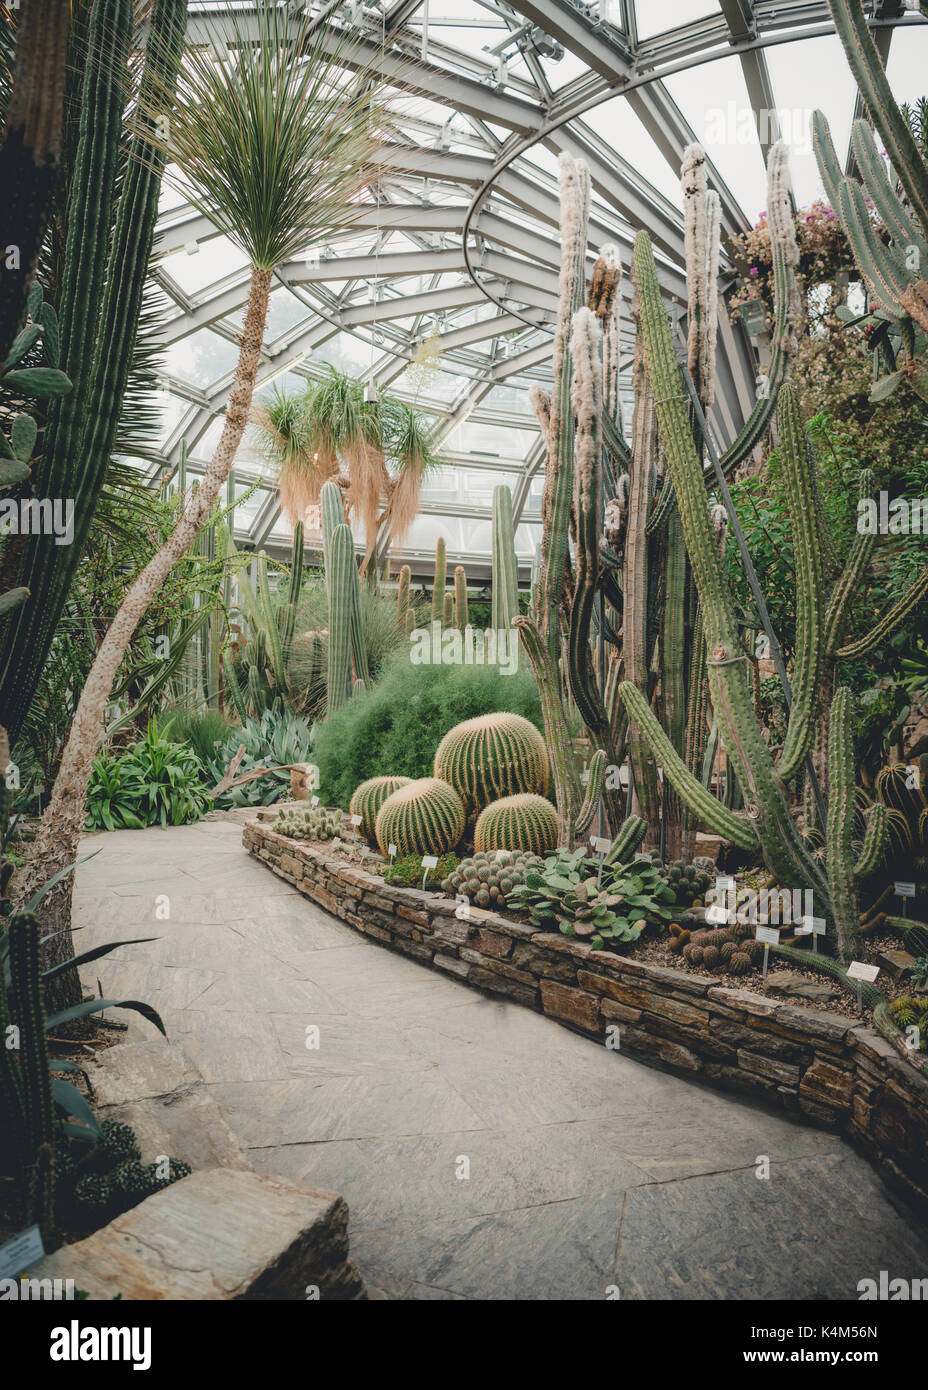 Beautiful mature cacti in an indoor botanical garden greenhouse. Stock Photo